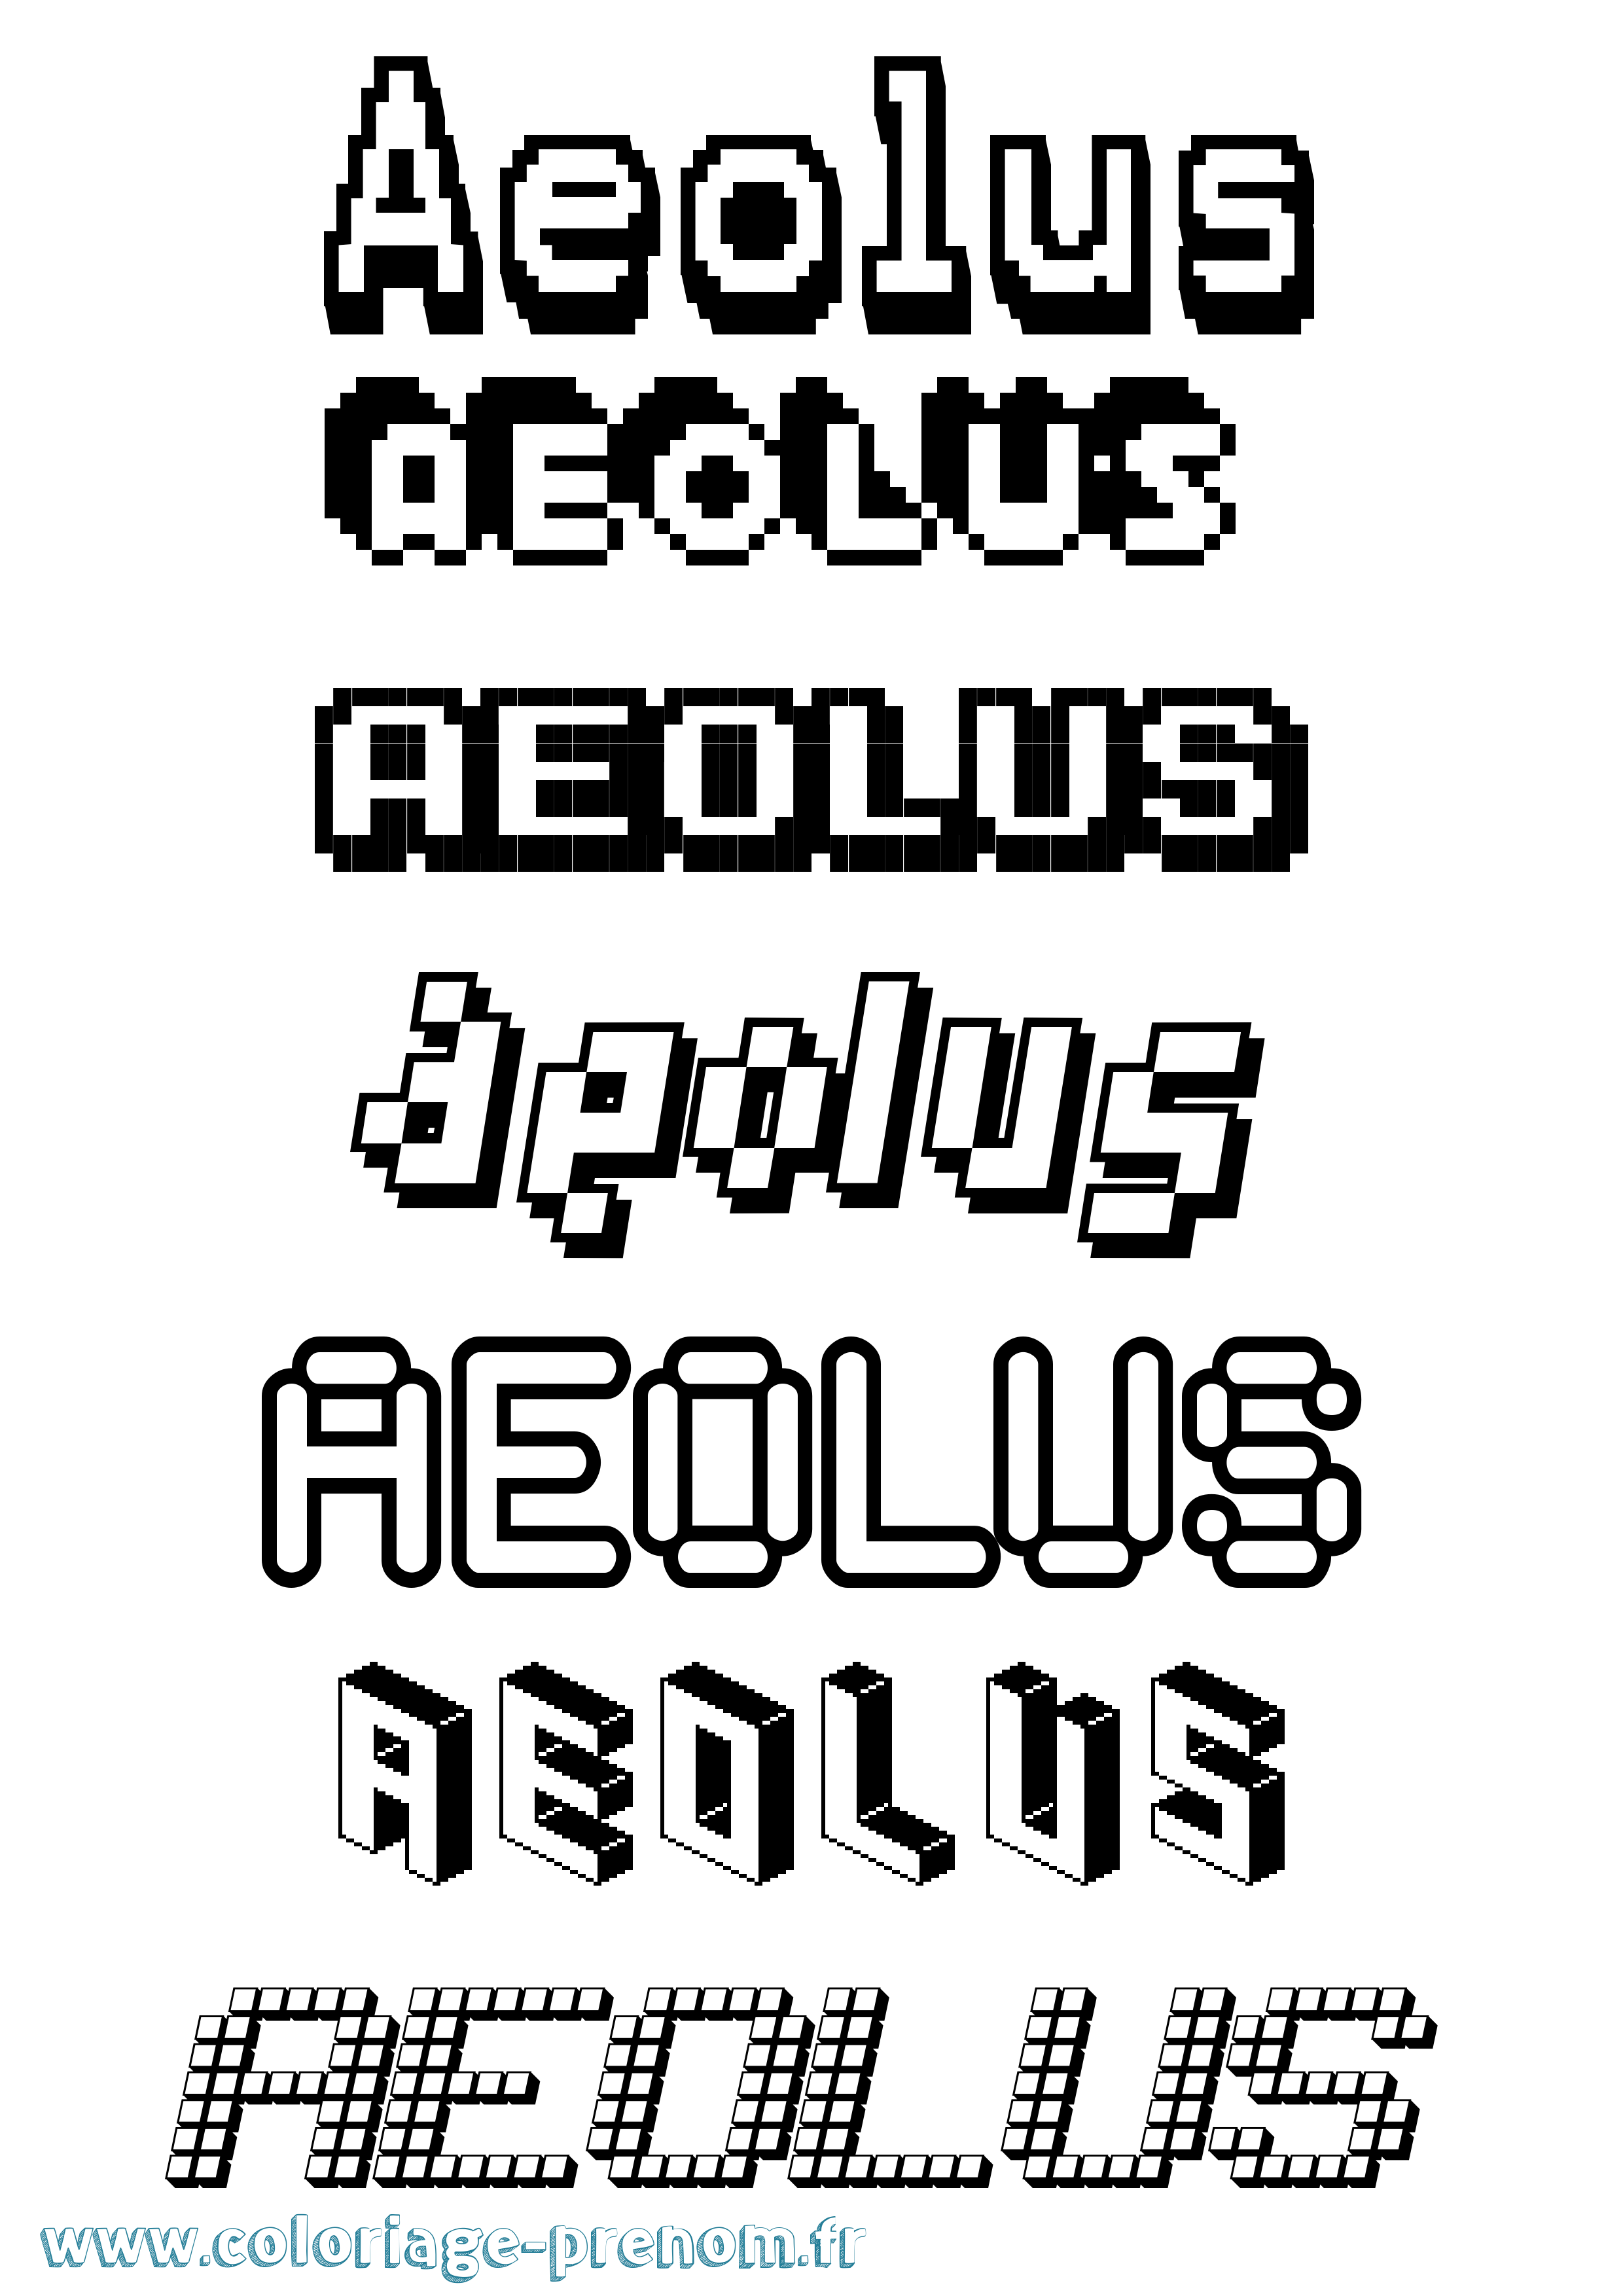 Coloriage prénom Aeolus Pixel